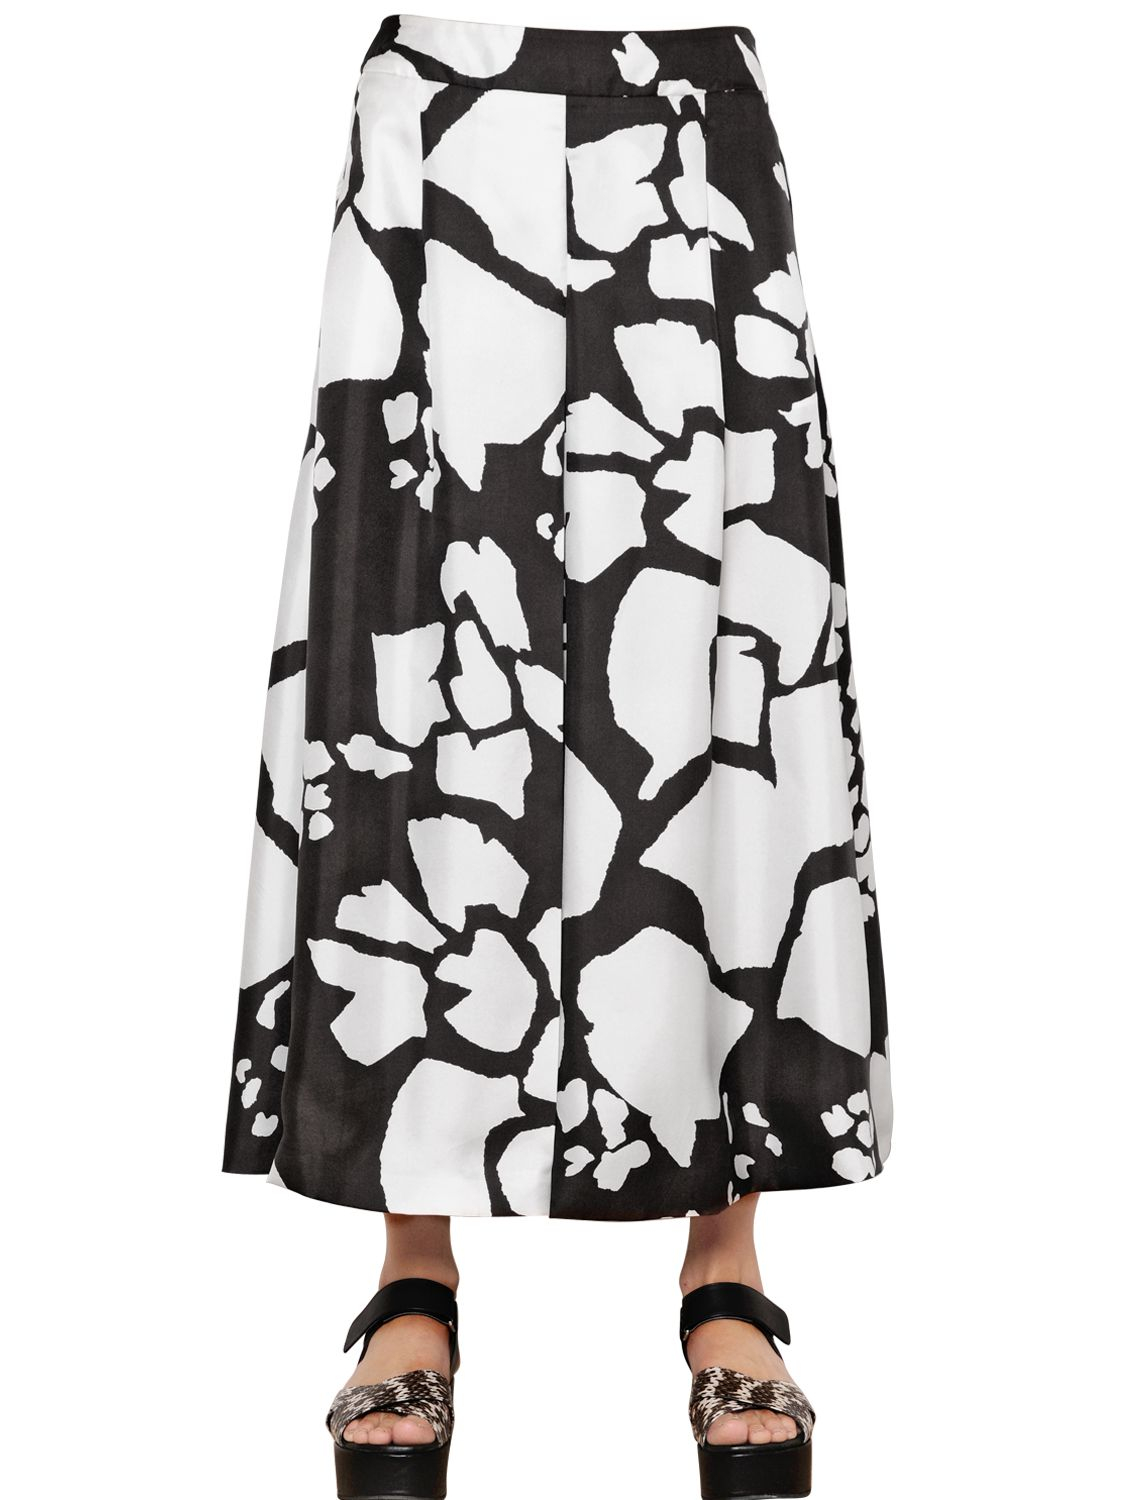 Max Mara Pleated Printed Silk Twill Skirt in White/Brown (Black) - Lyst